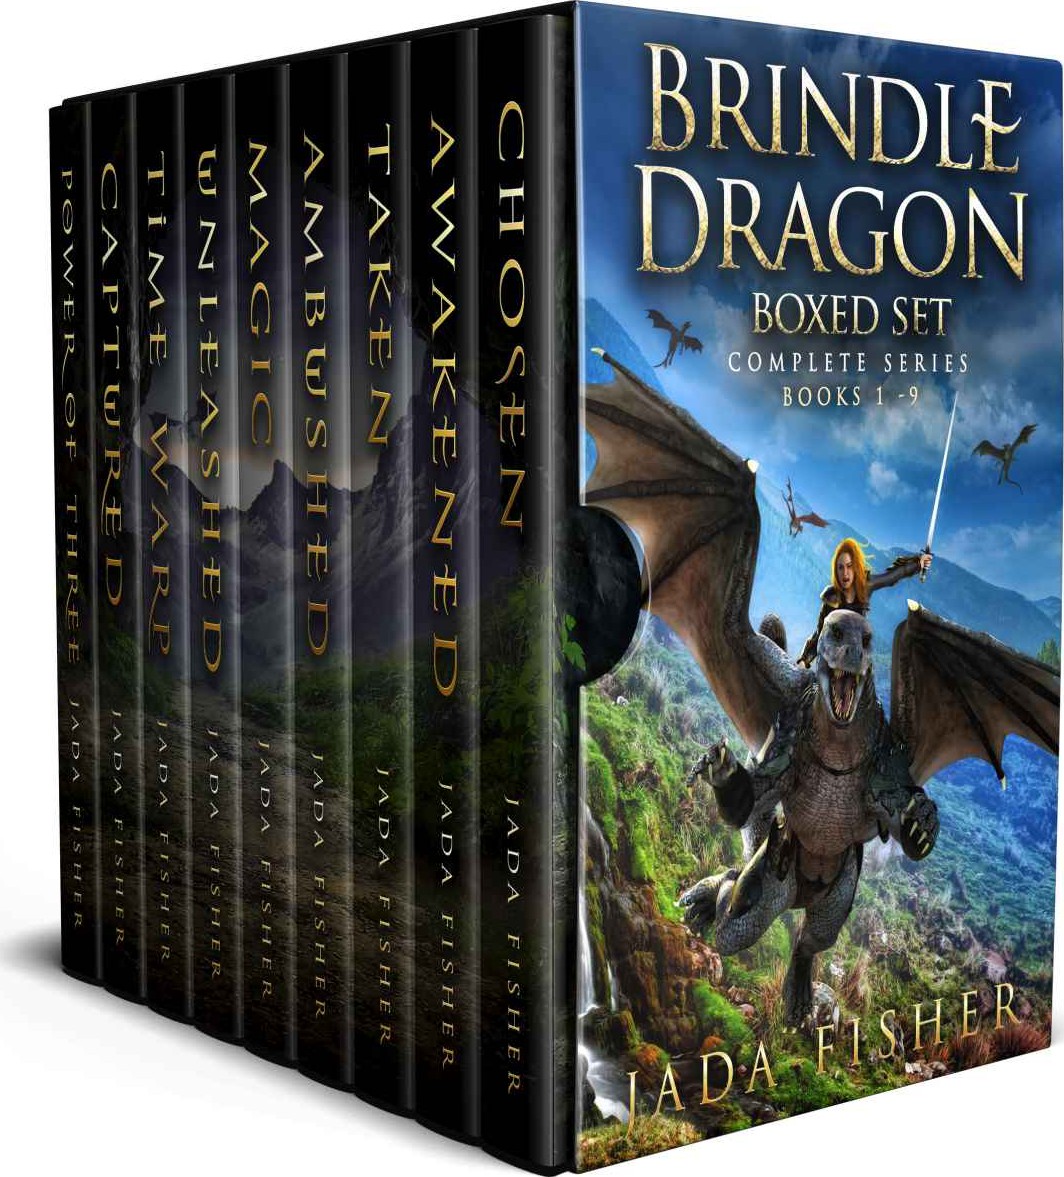 Brindle Dragon Boxed Set #1-9